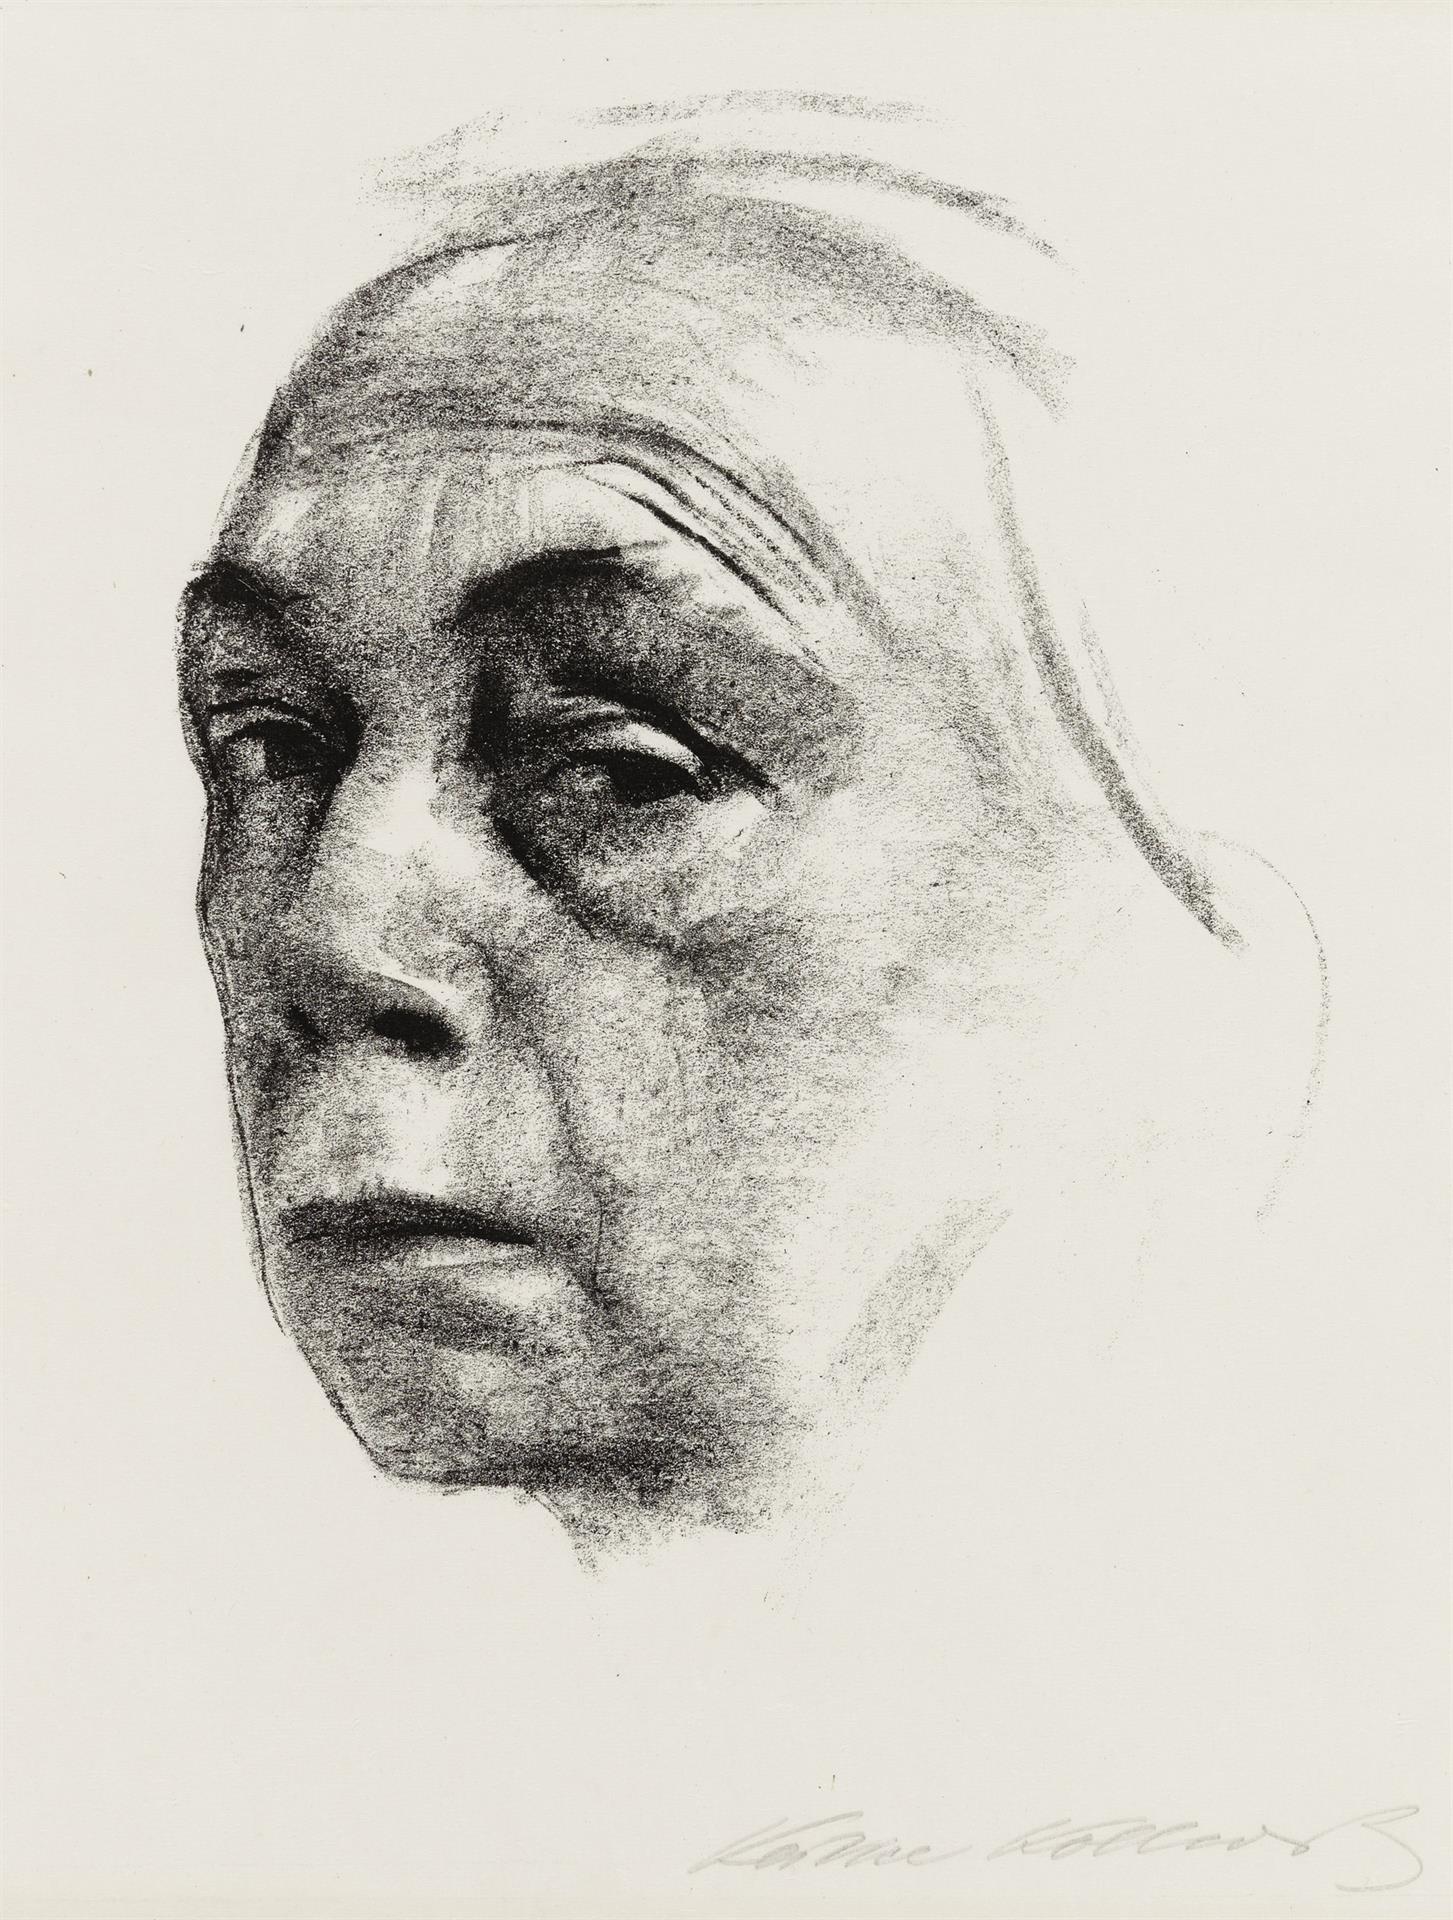 Käthe Kollwitz, Self-portrait, 1924, chalk lithograph (transfer), Kn 209 b, Cologne Kollwitz Collection © Käthe Kollwitz Museum Köln